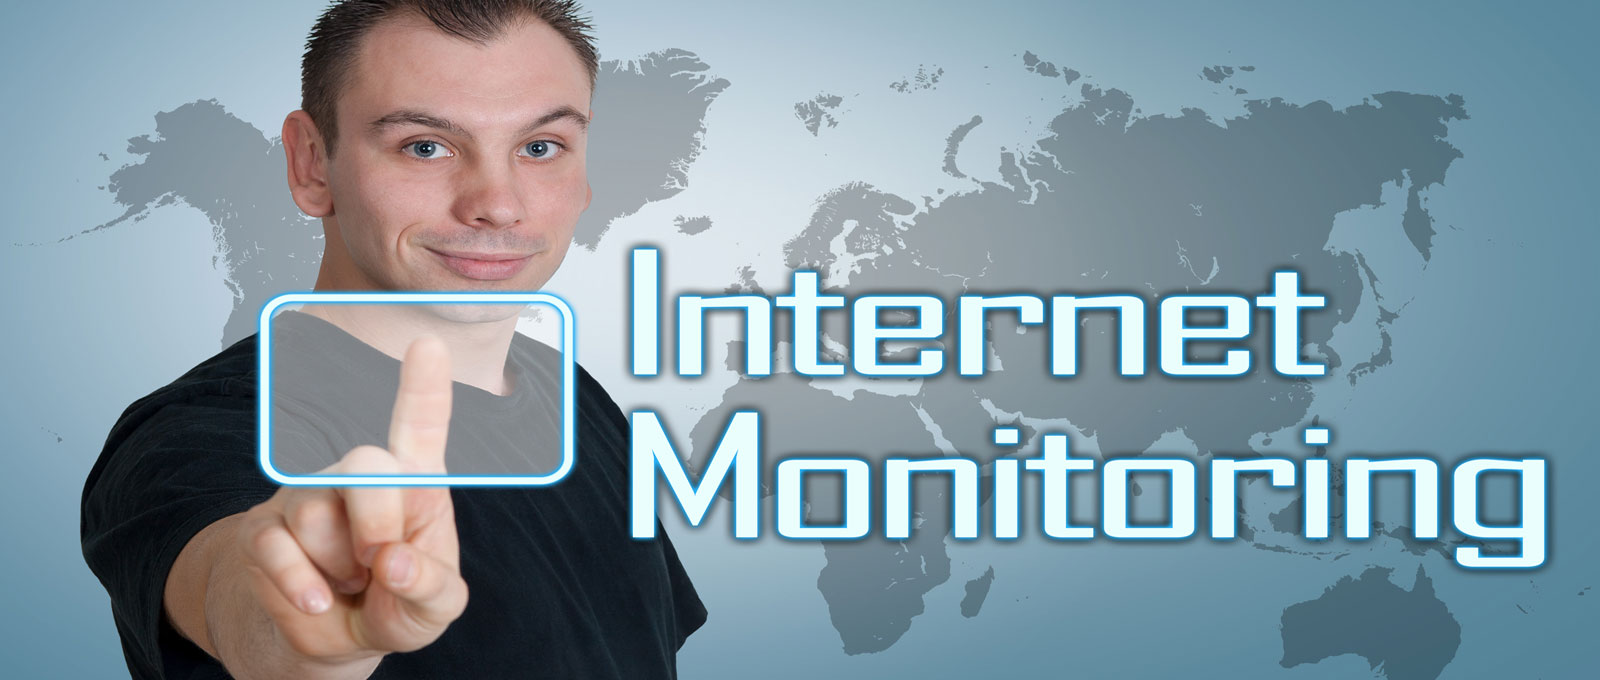 Internet monitoring